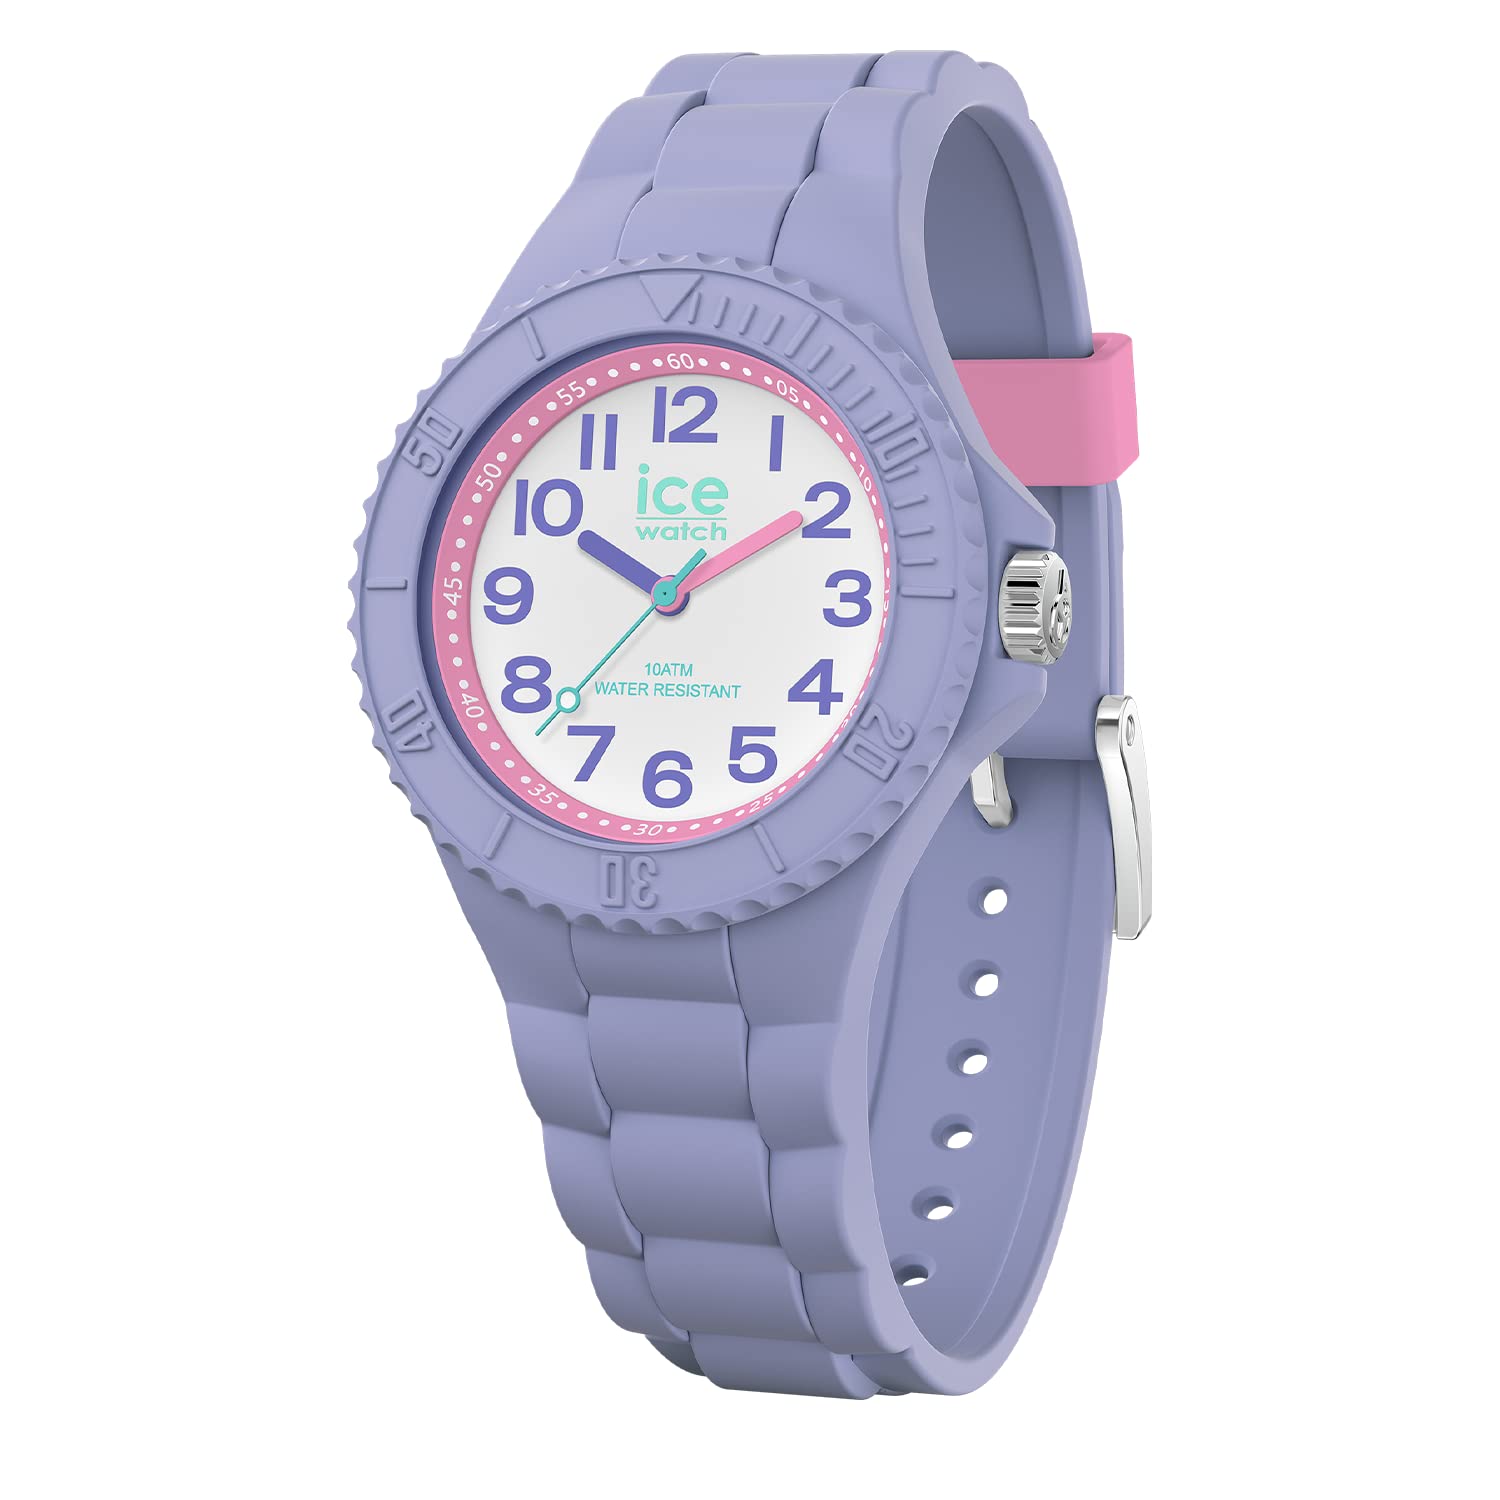 acheter Ice Watch Uhren Analog Quarz 32020902 qIwF9QU05 pas cher